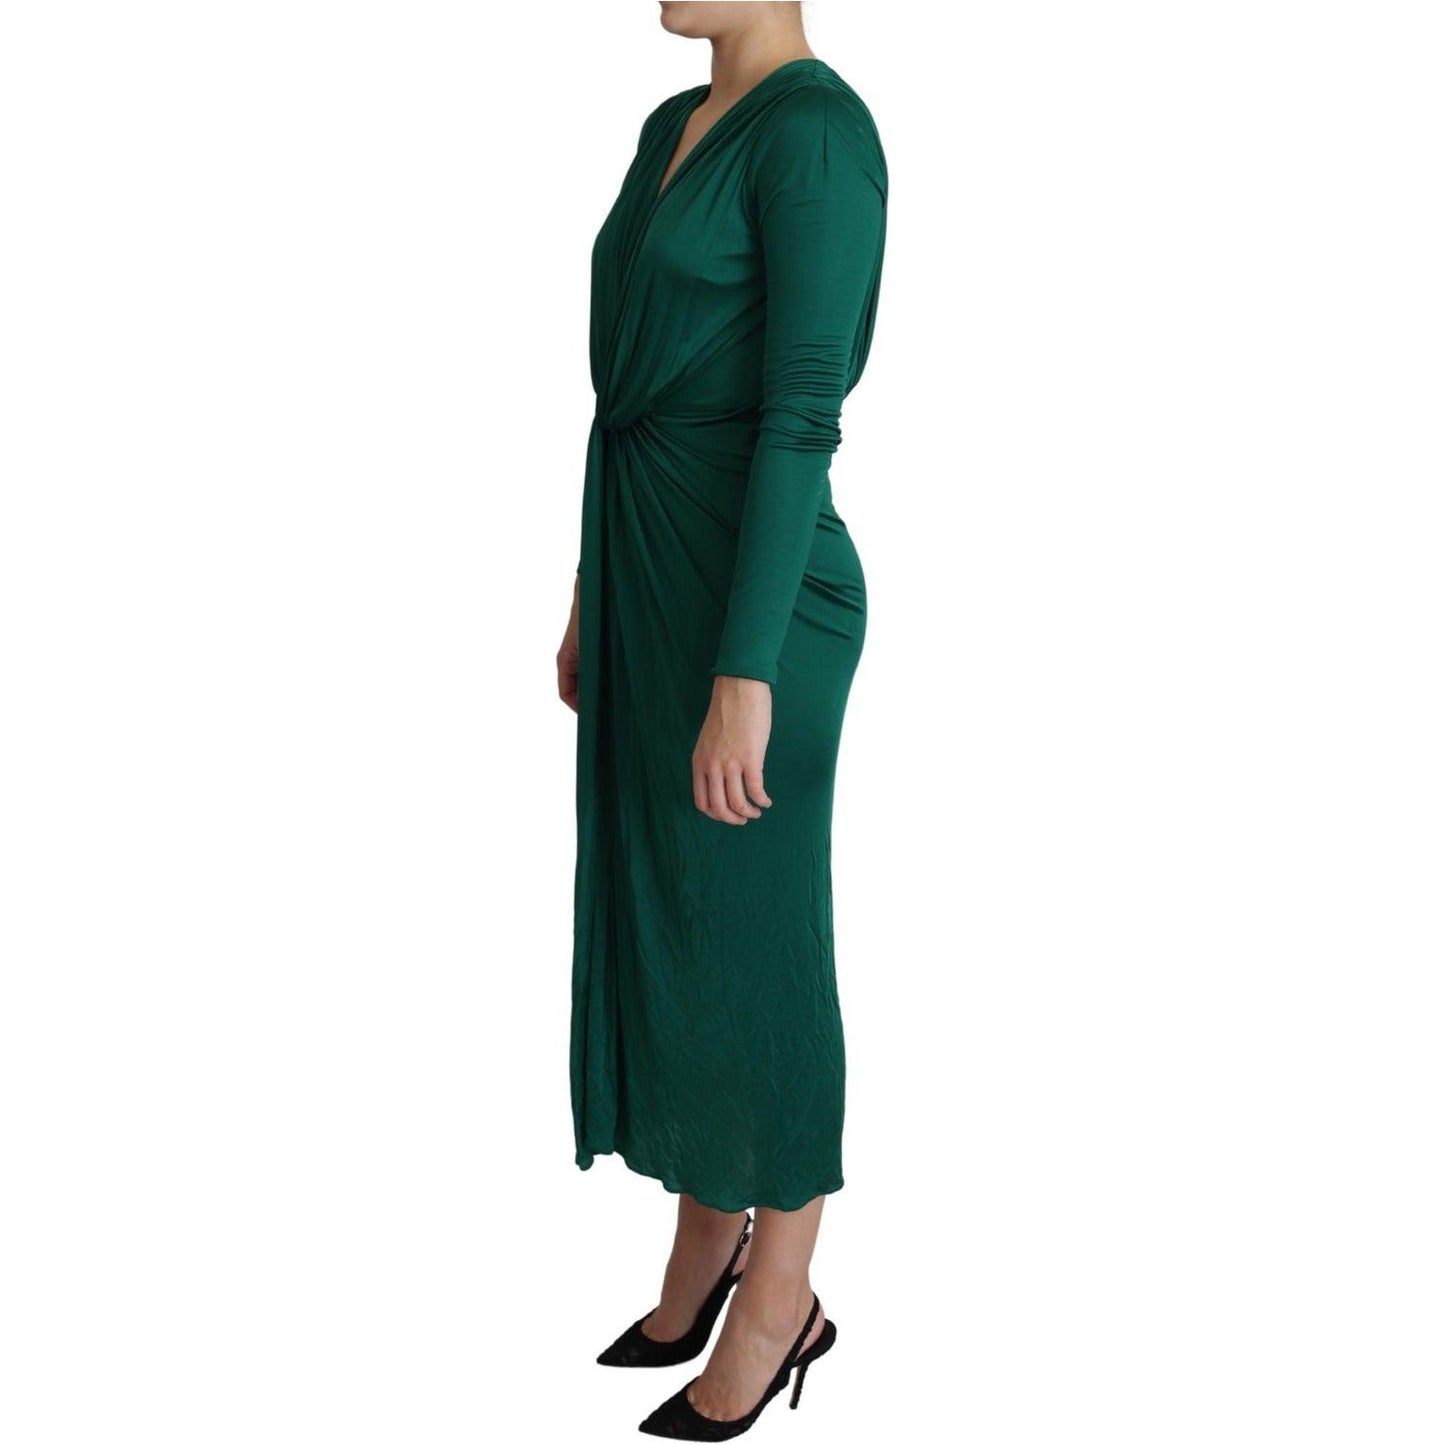 Dolce & Gabbana Emerald Elegance Bodycon Midi Dress green-fitted-silhouette-midi-viscose-dress IMG_9480-scaled-d342f3c3-389.jpg